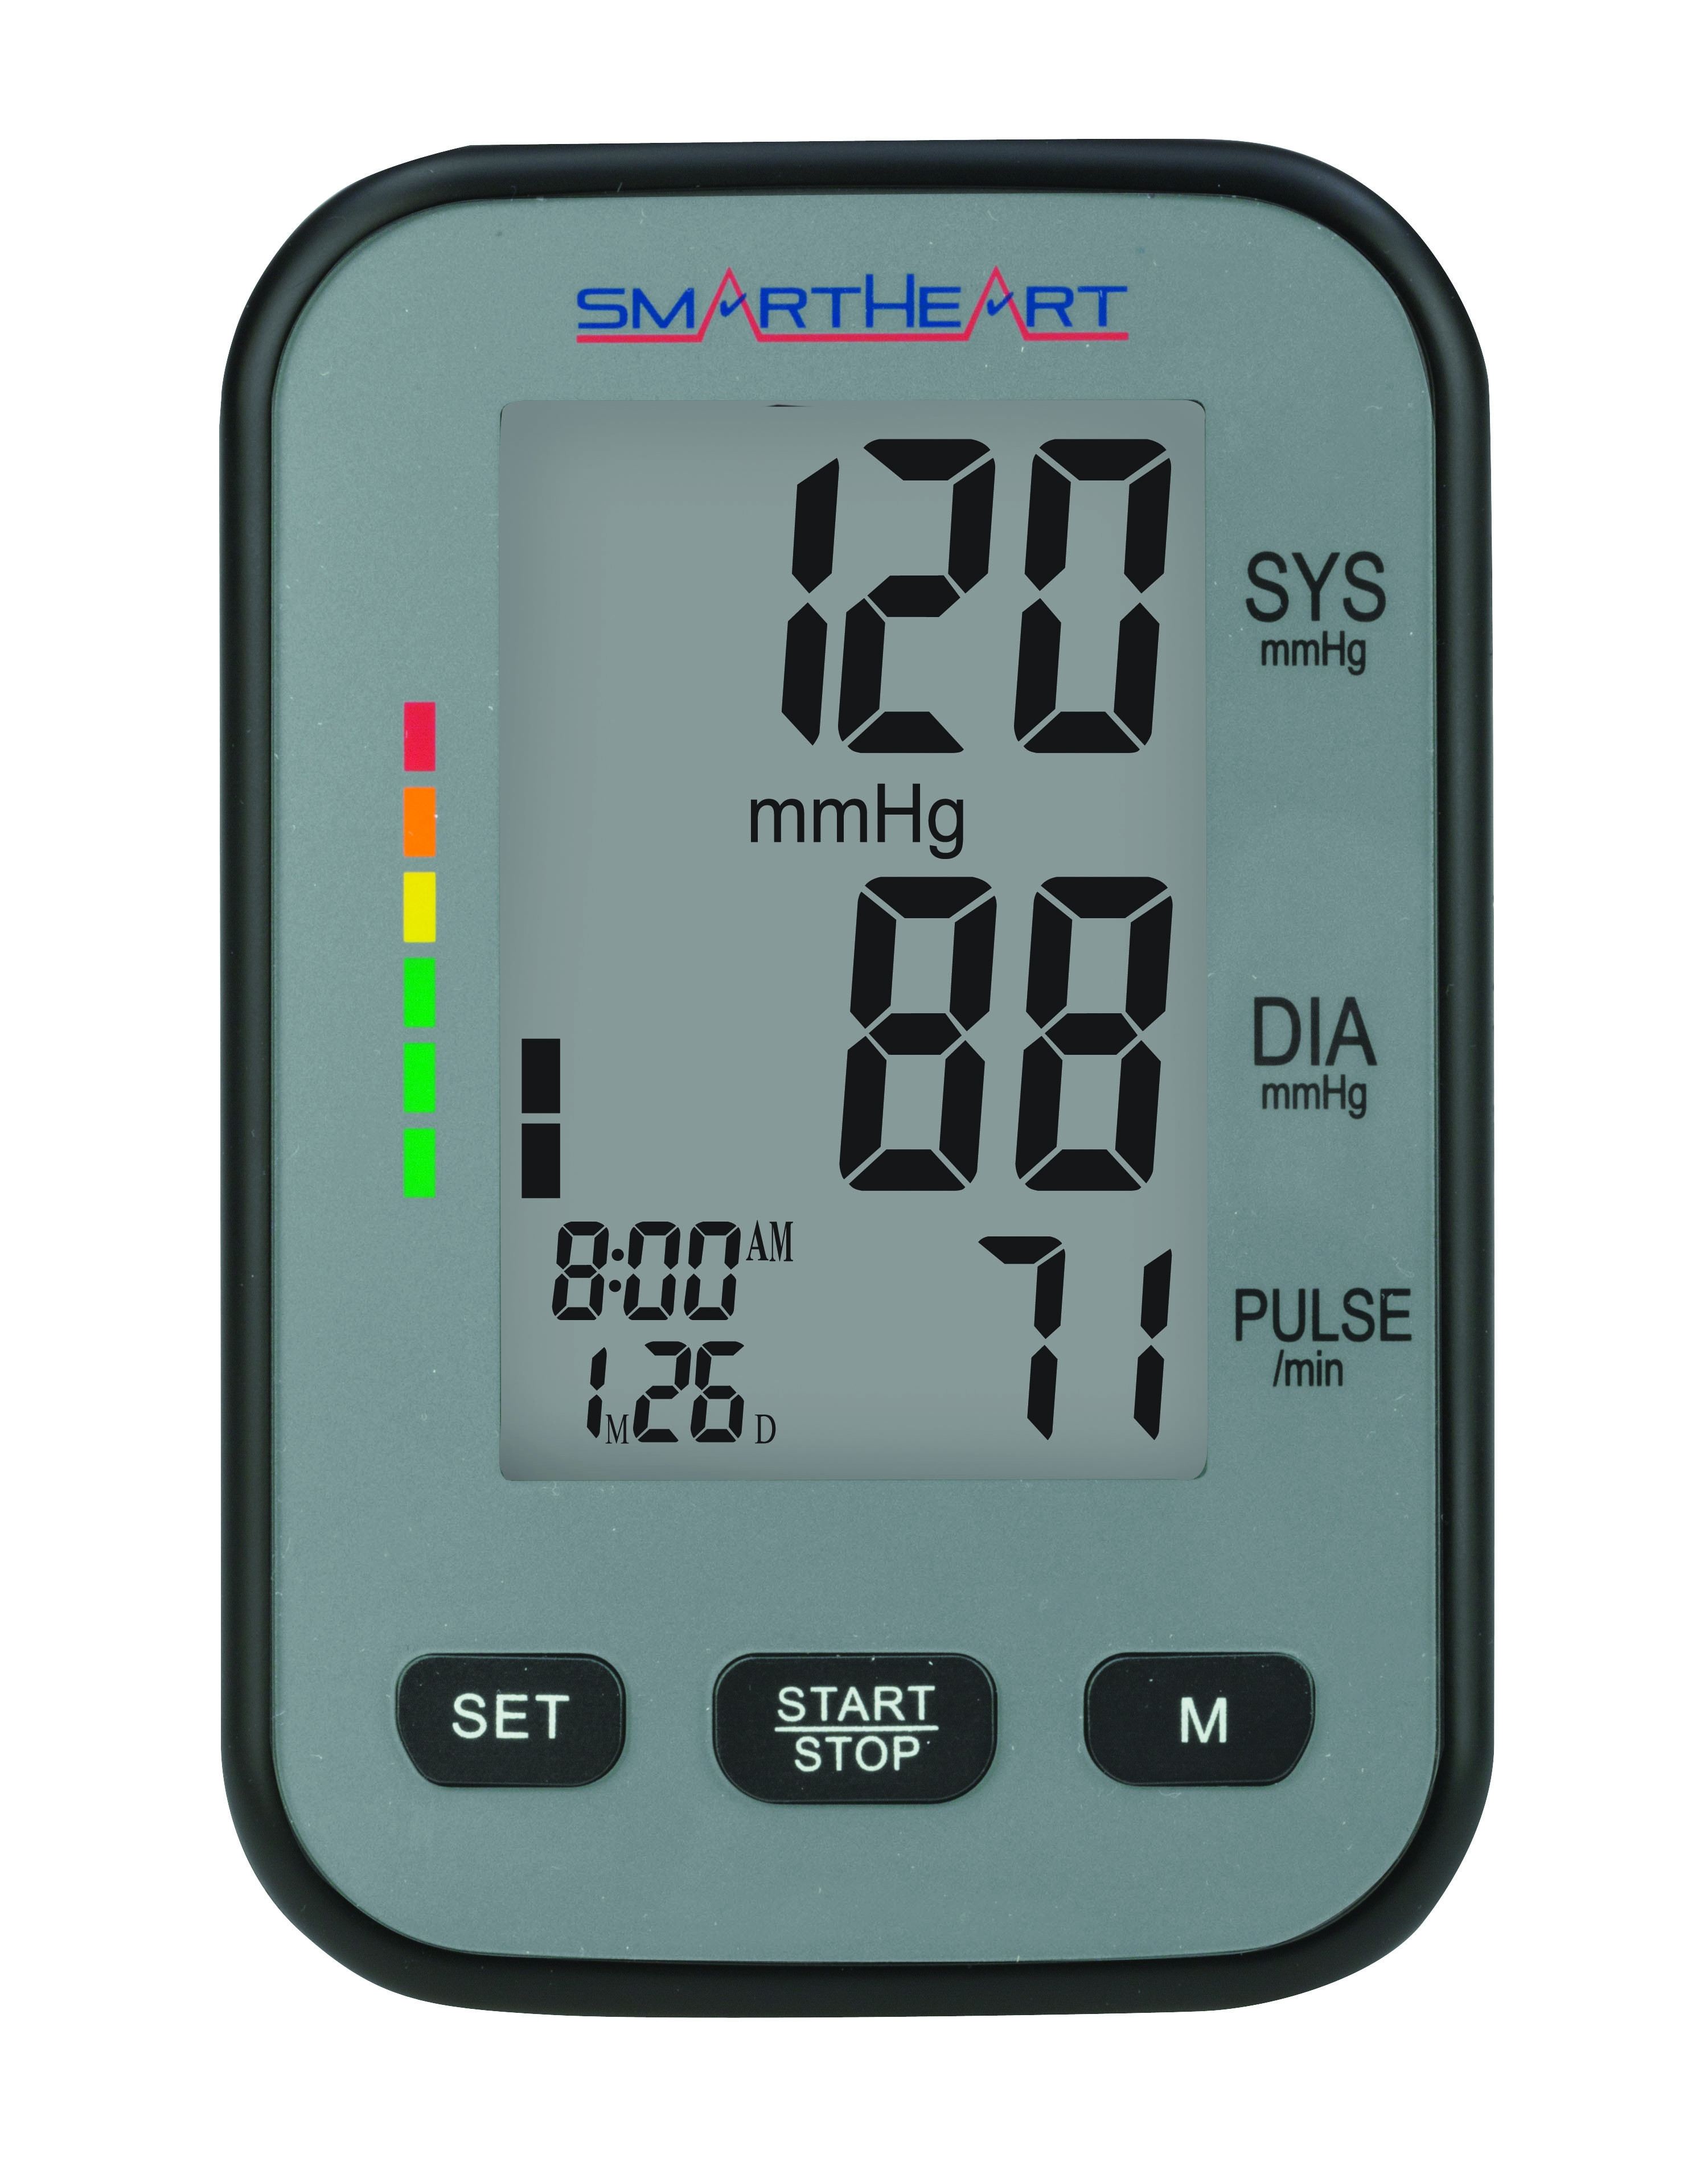 Smartheart Automatic Arm Digital Blood Pressure Monitor